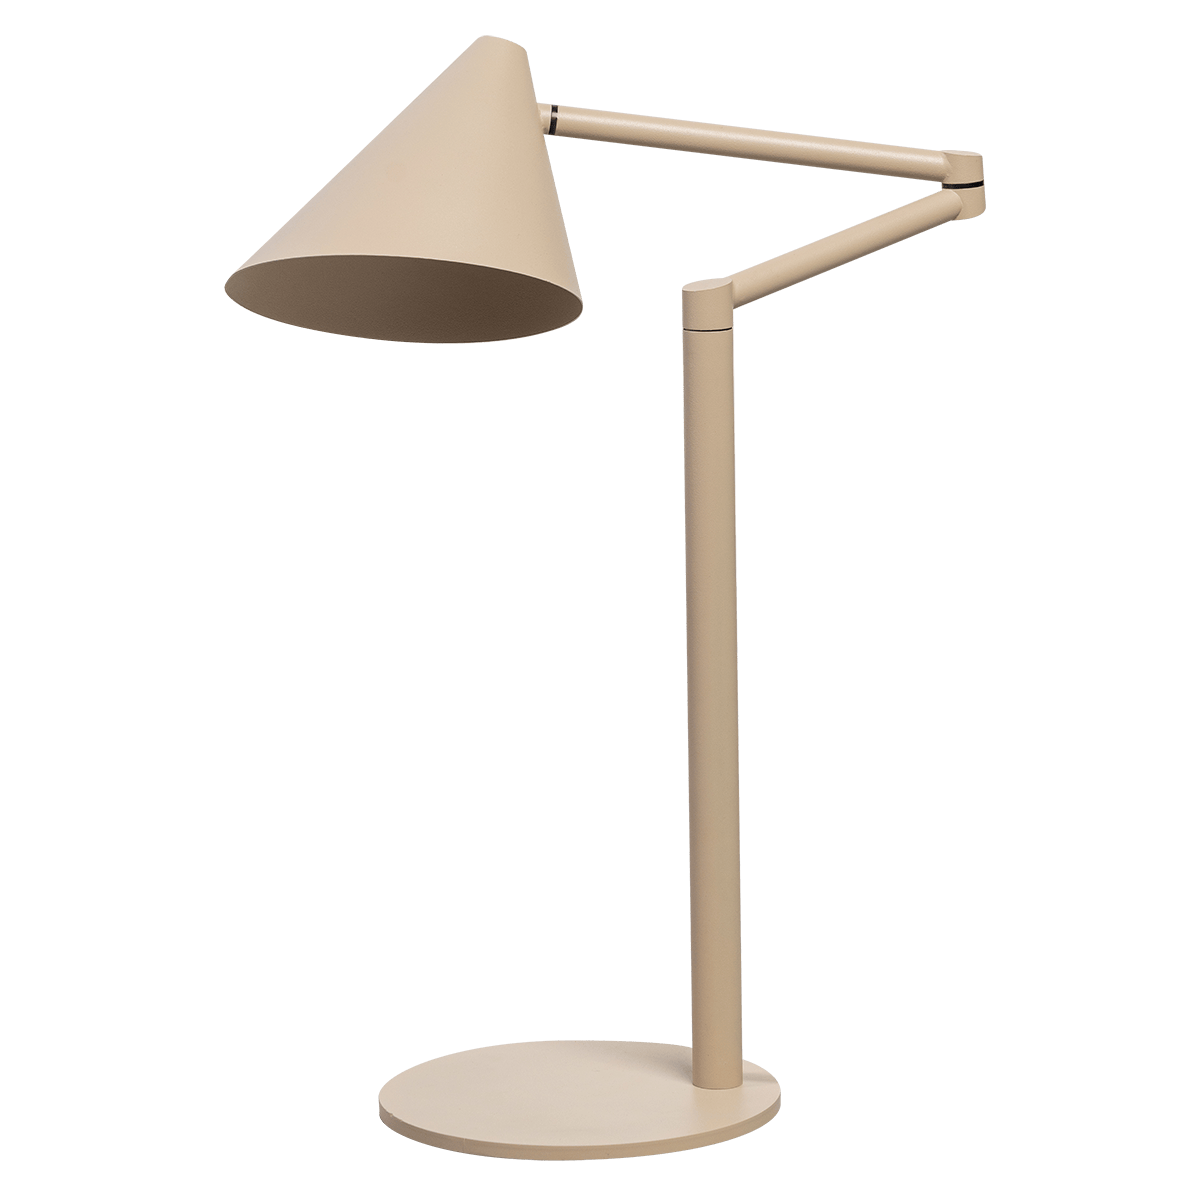 05-TL3248-59. Moderne verstelbare tafellamp Marvis